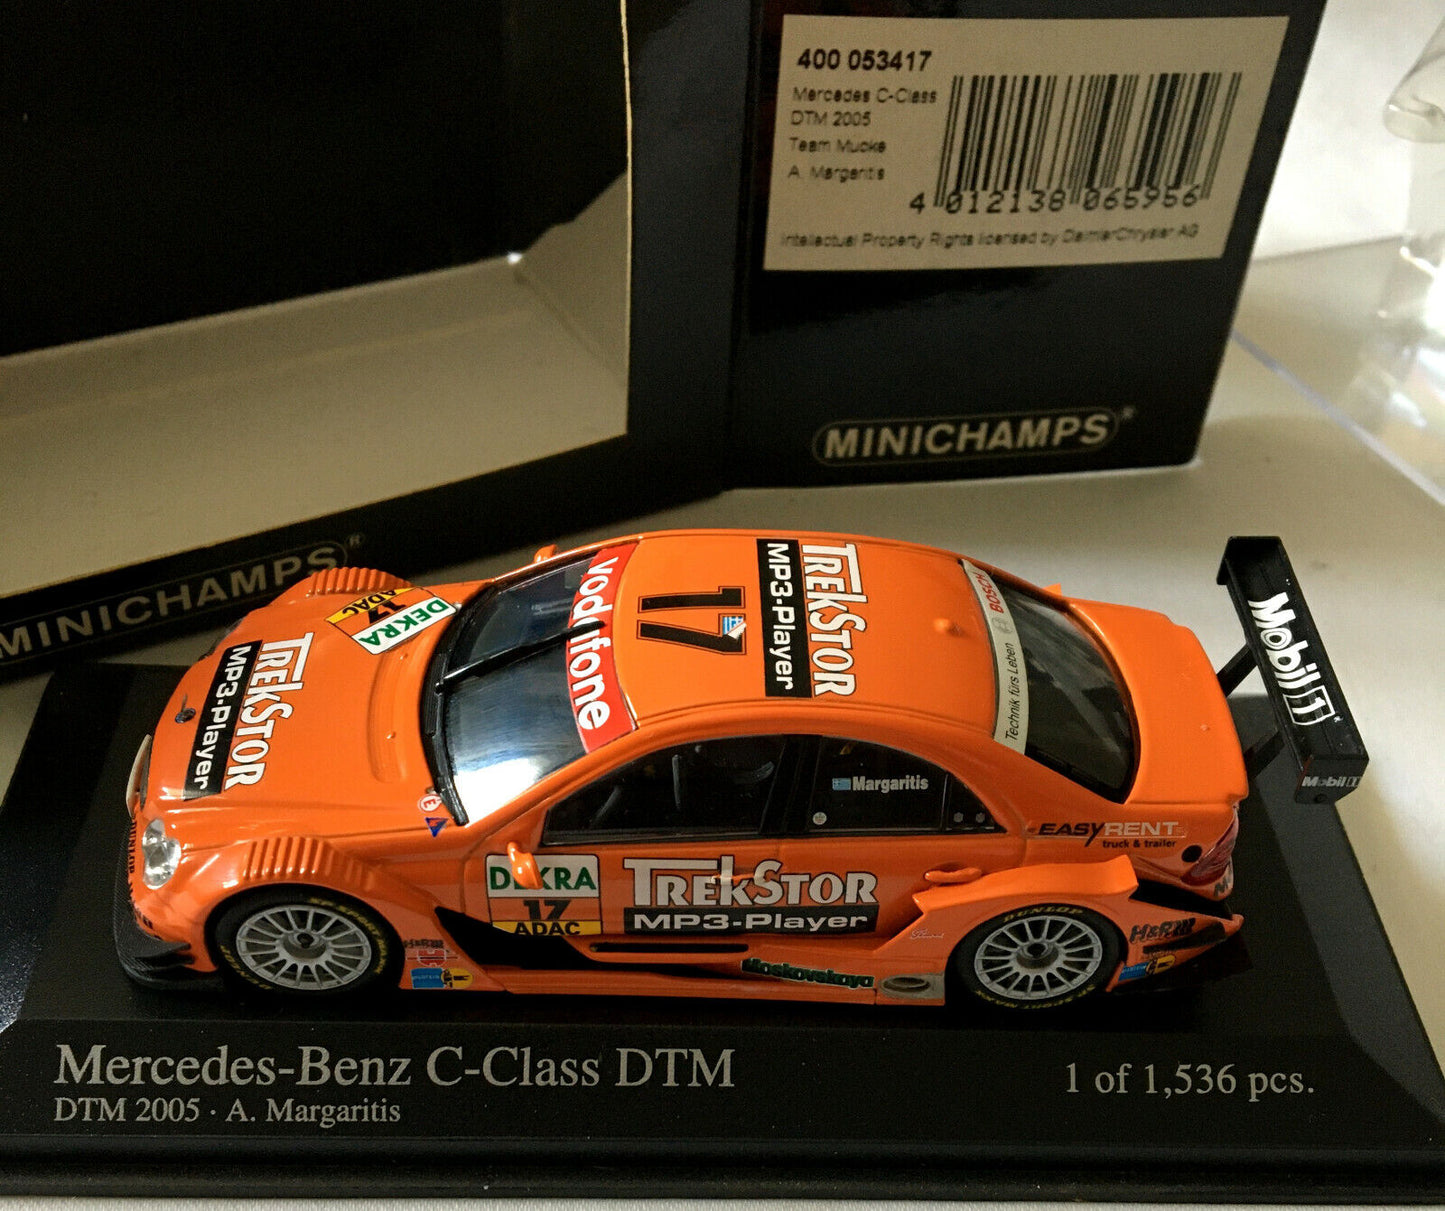 Minichamps 1:43 Mercedes-Benz C-Class Alexandros Margaritis Team Muecke Motorsport #17 DTM 2005 400053417